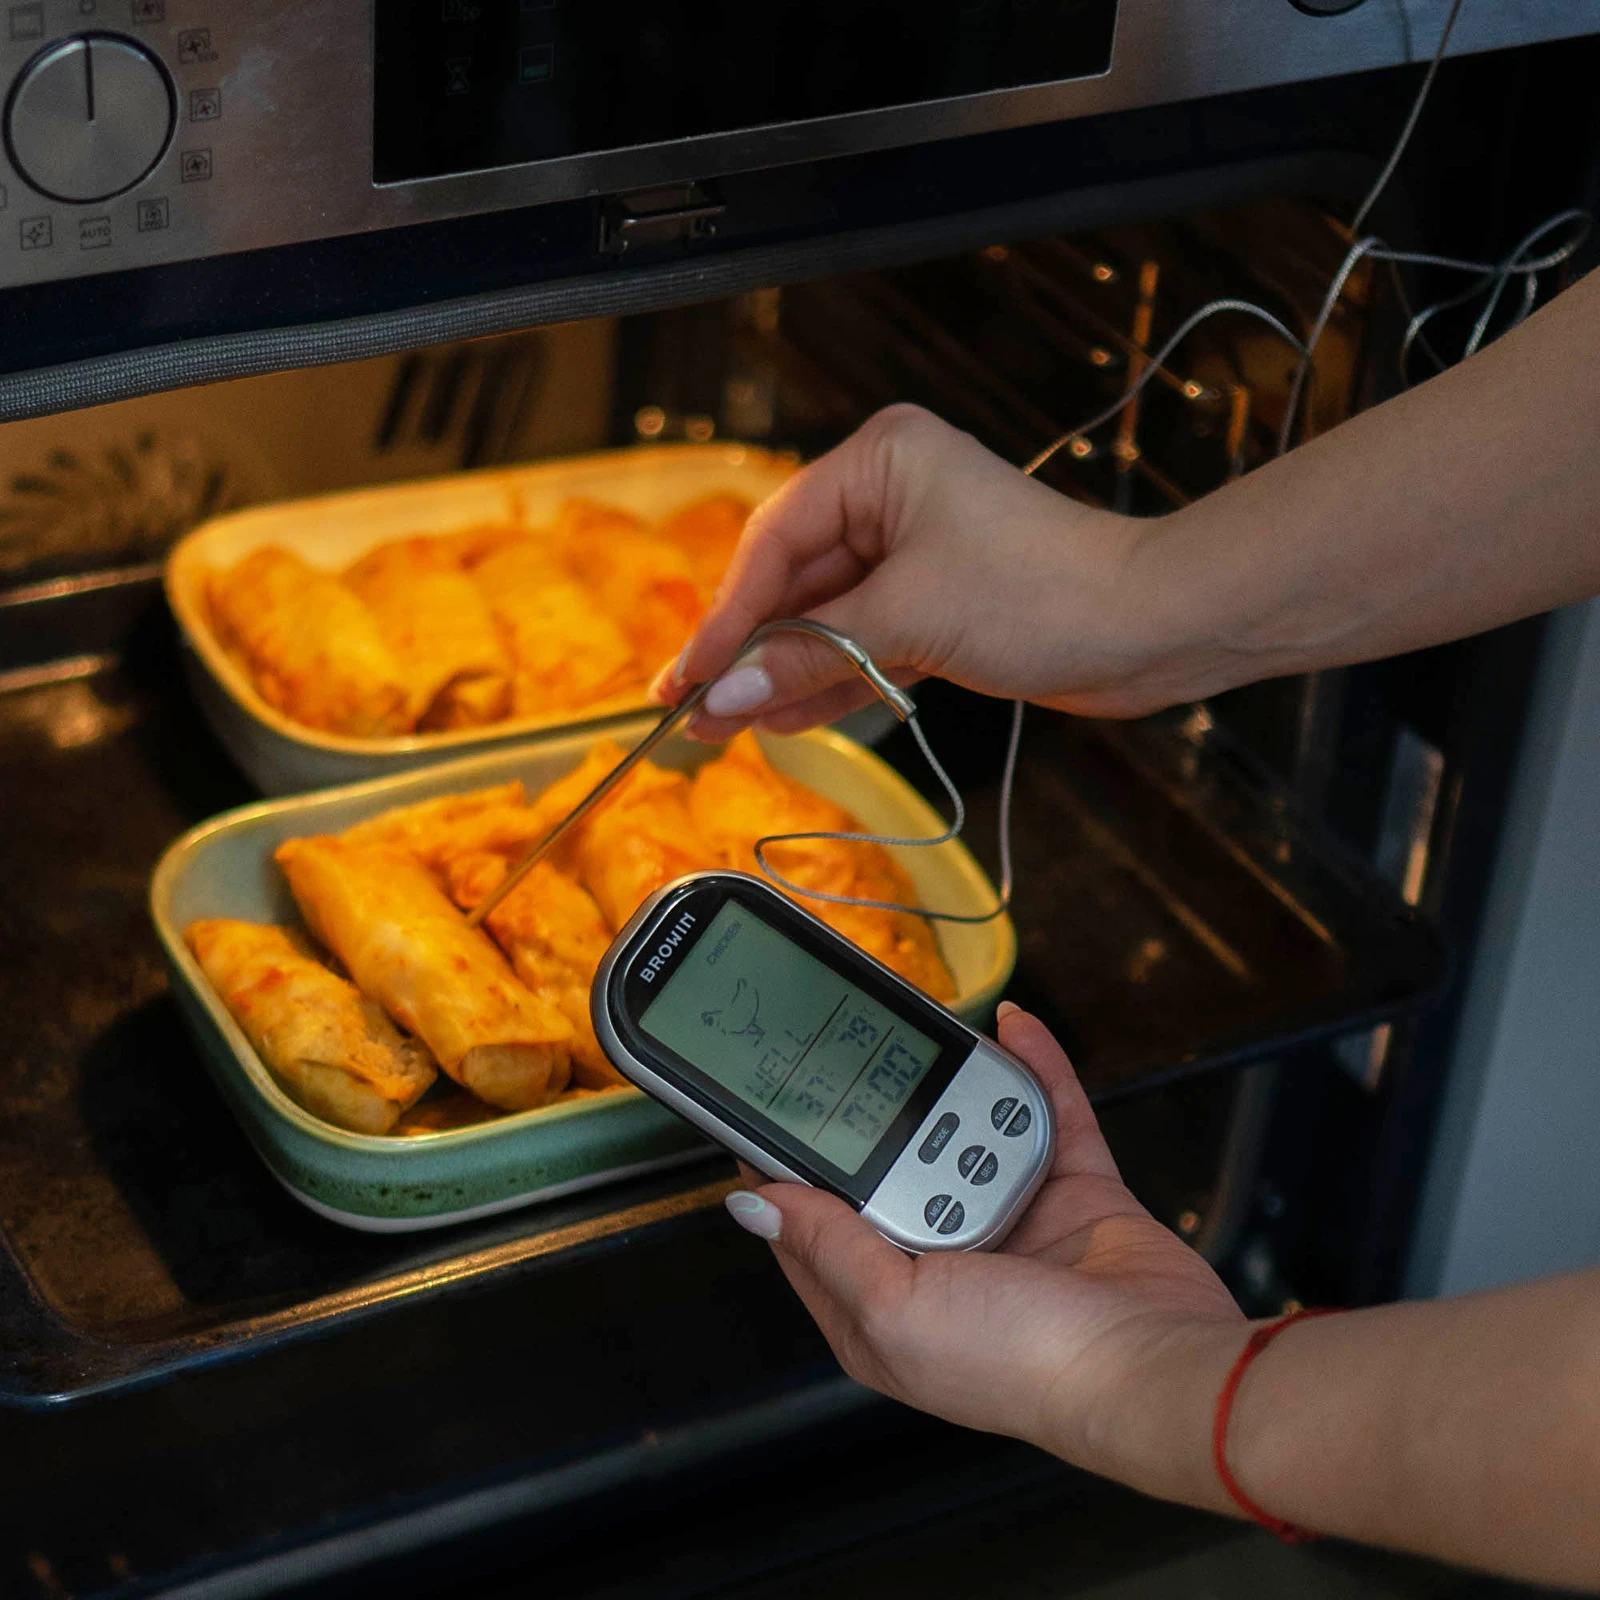 Digitales Lebensmittelthermometer (0°C bis 250°C) (küchenthermometer) -  symbol:185909